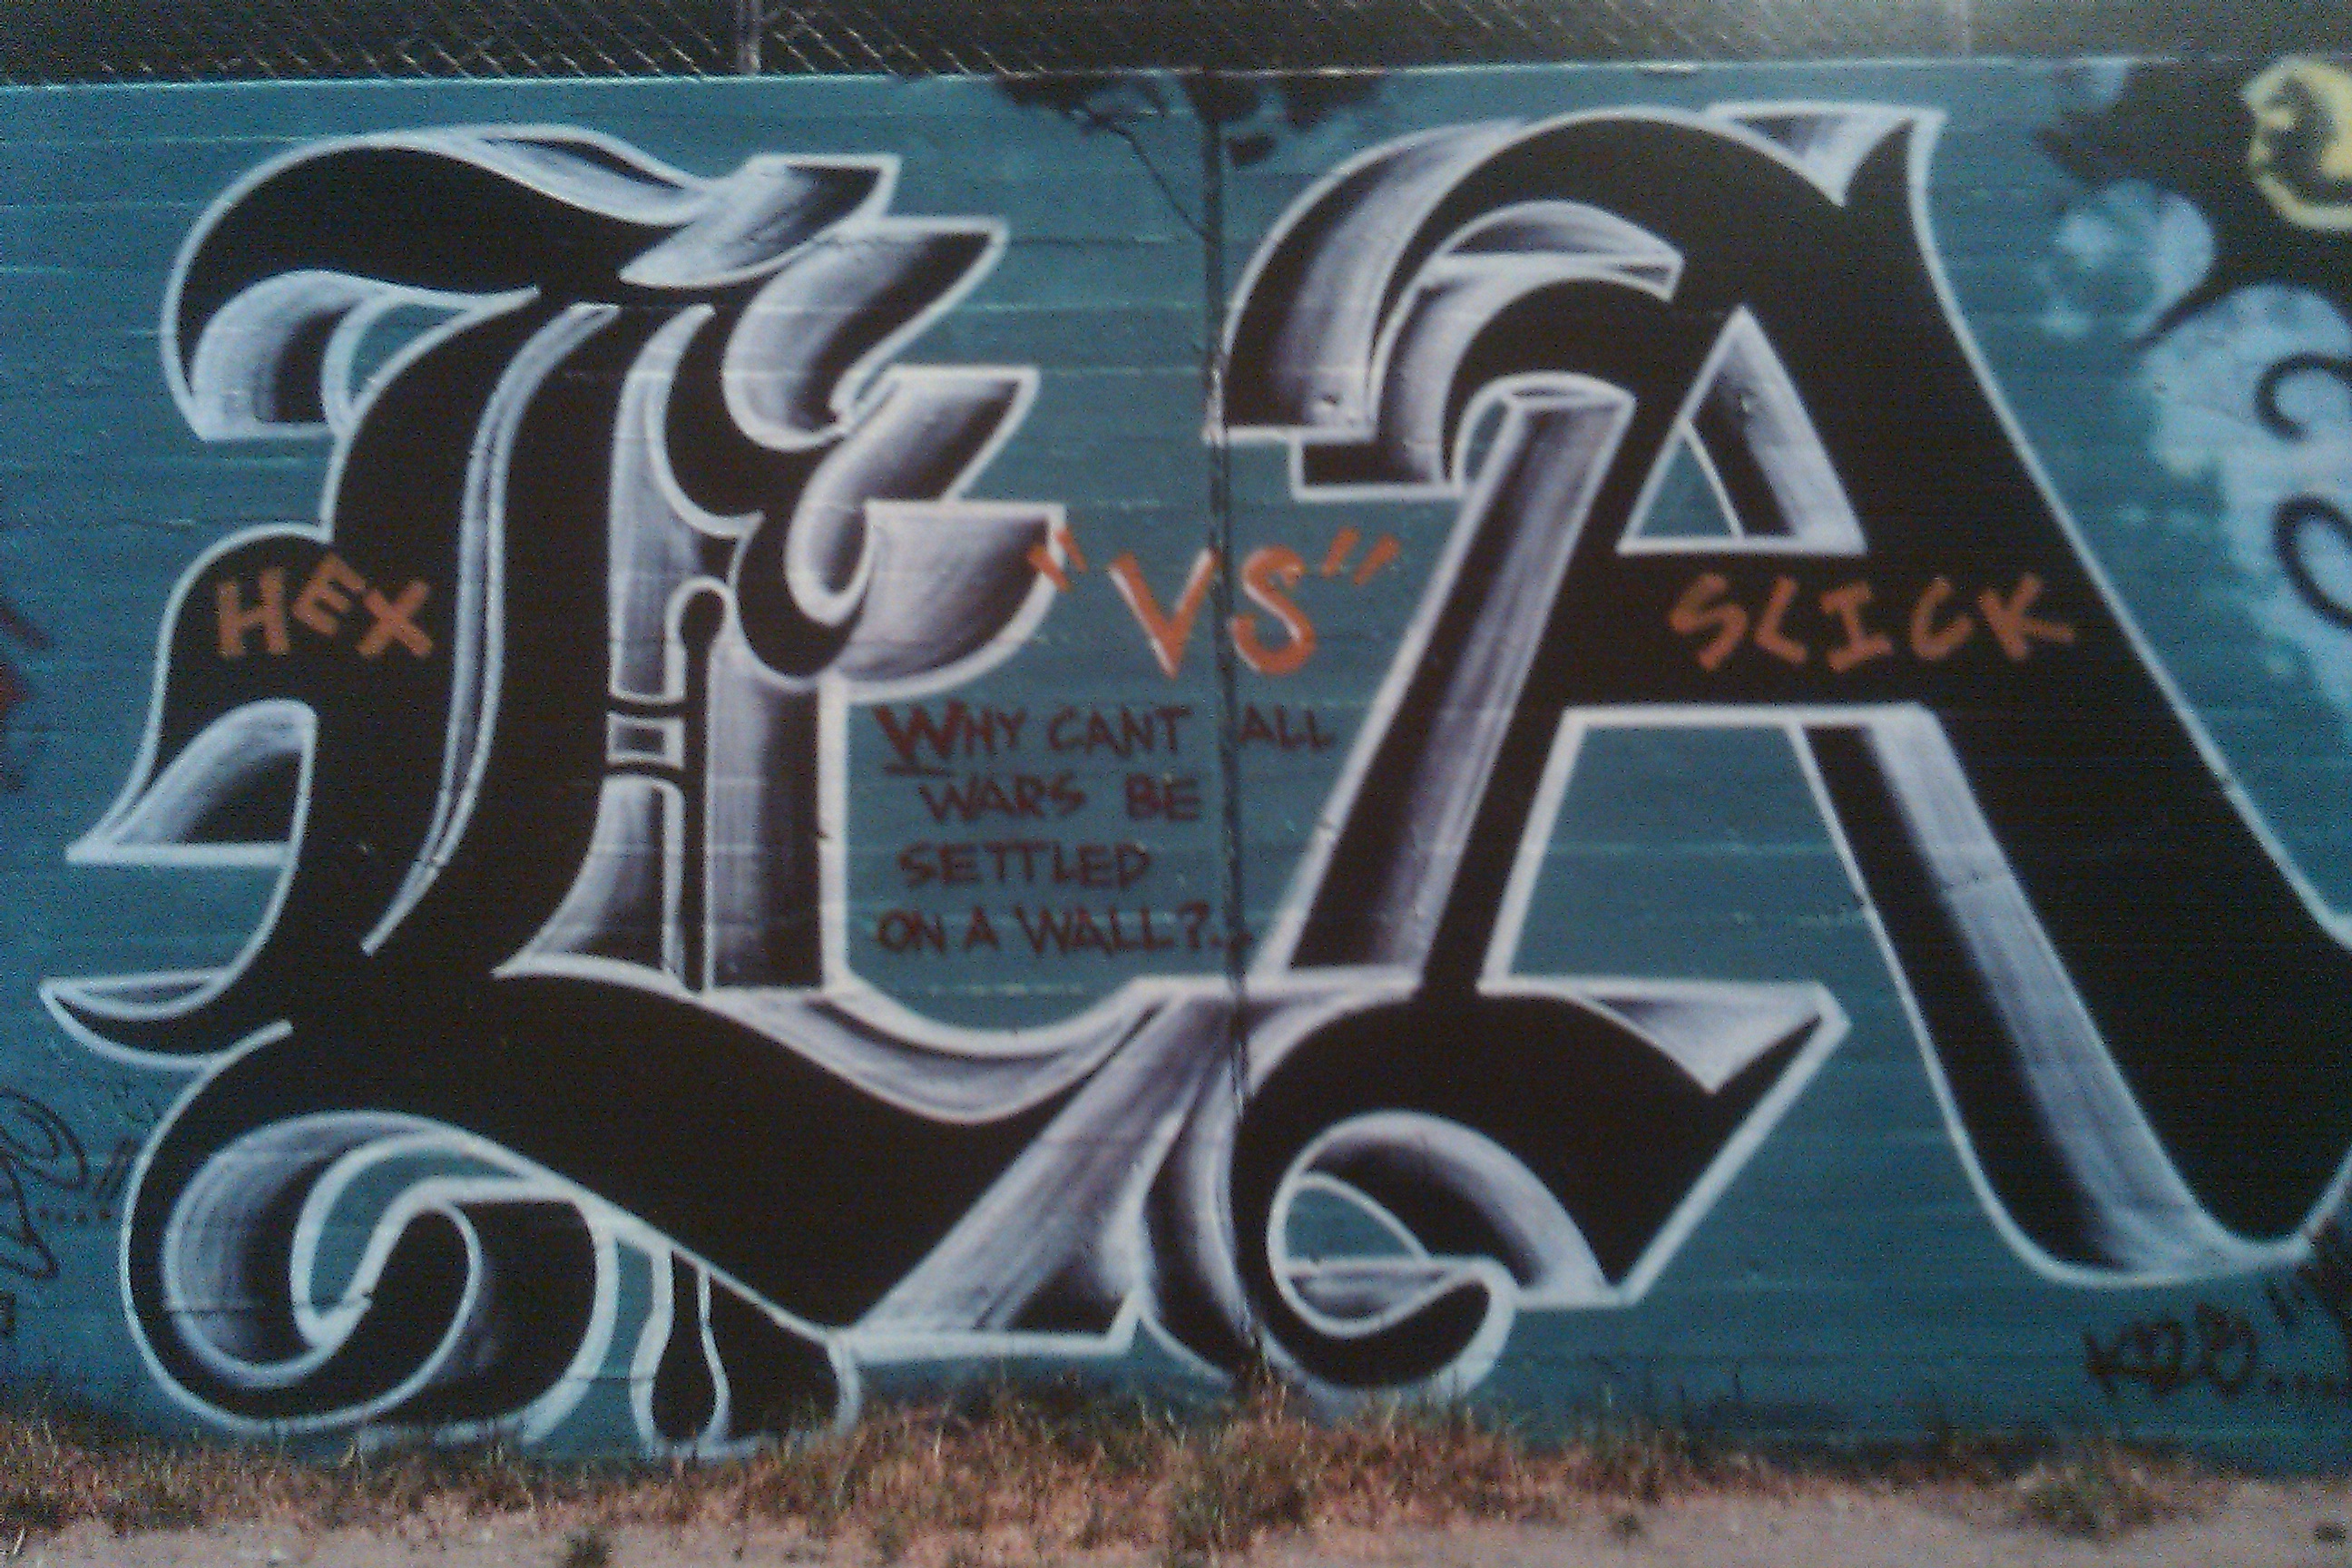 slick vs hex graffiti - Chs Ik Why Cant All Wars Be Settled Ona Wales